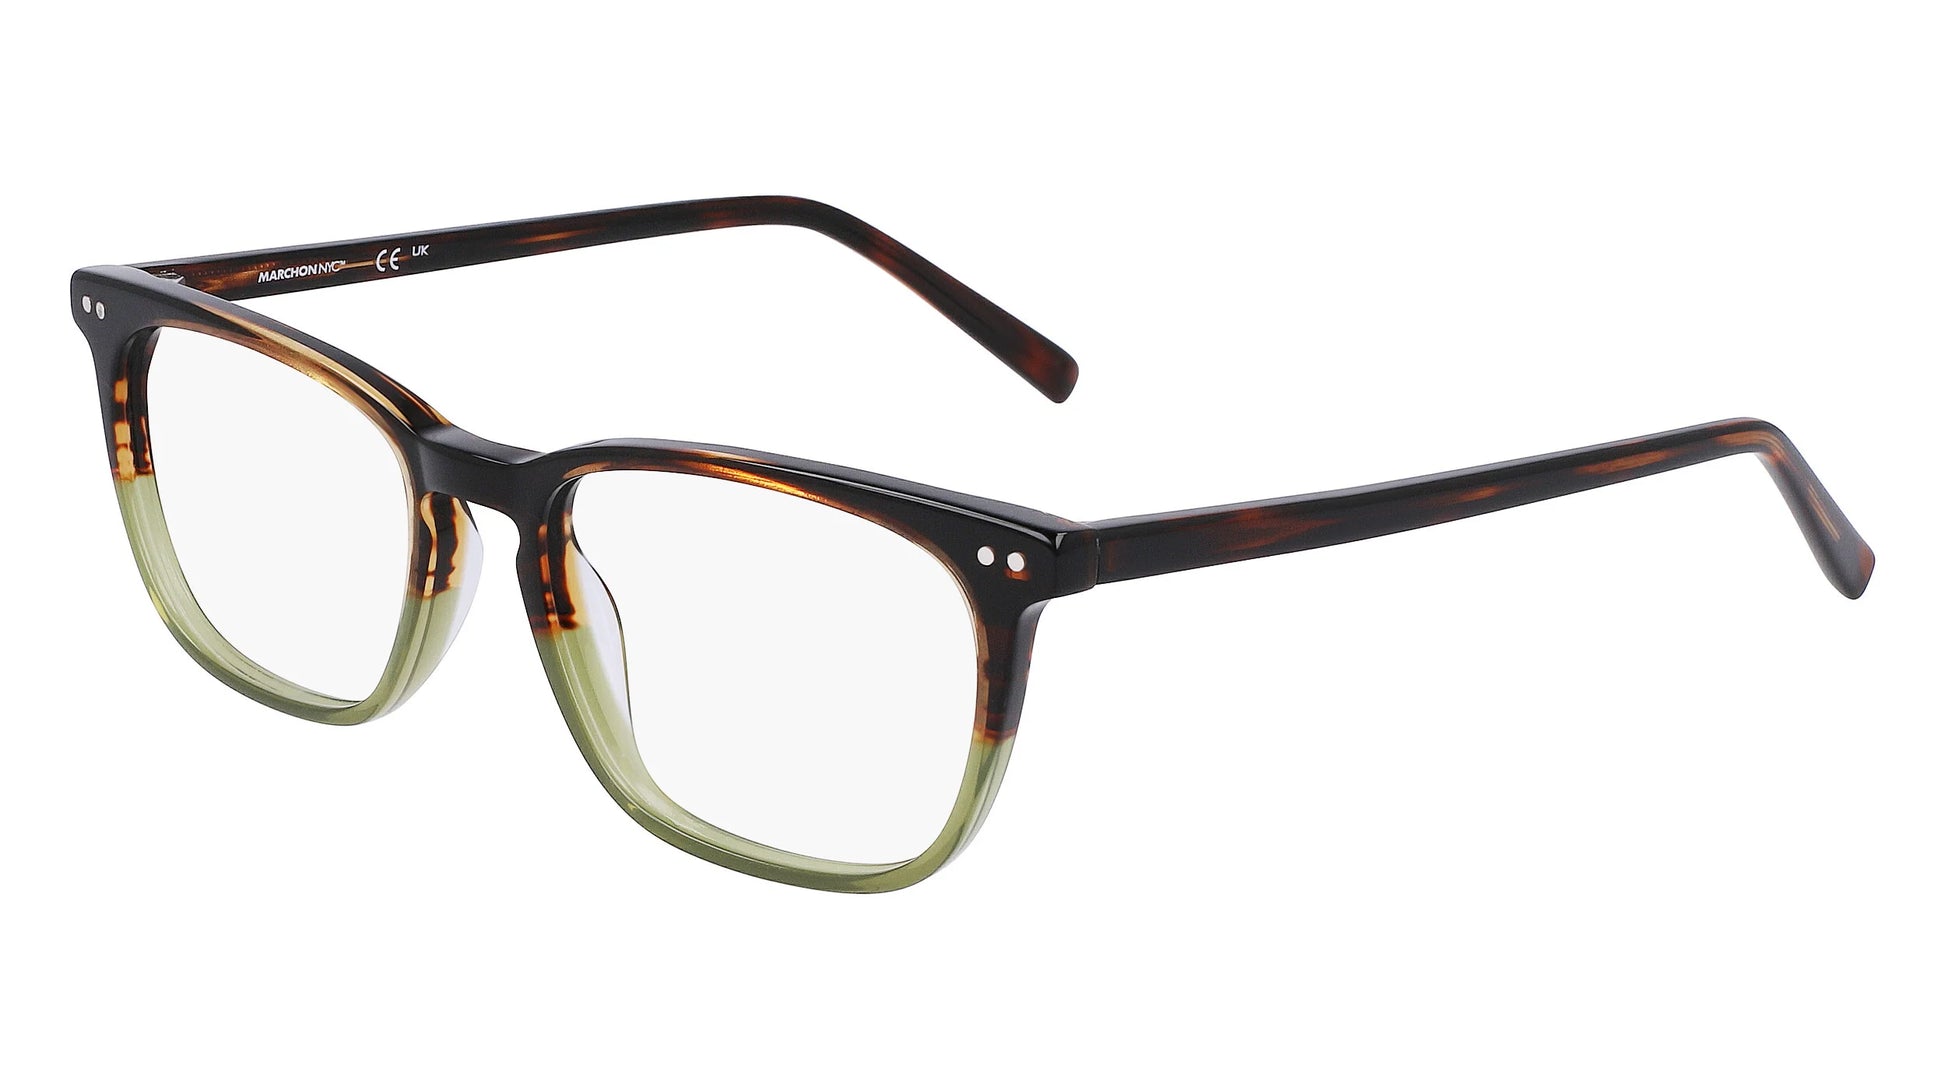 Marchon NYC M-3509 Eyeglasses Tortoise / Green Gradient